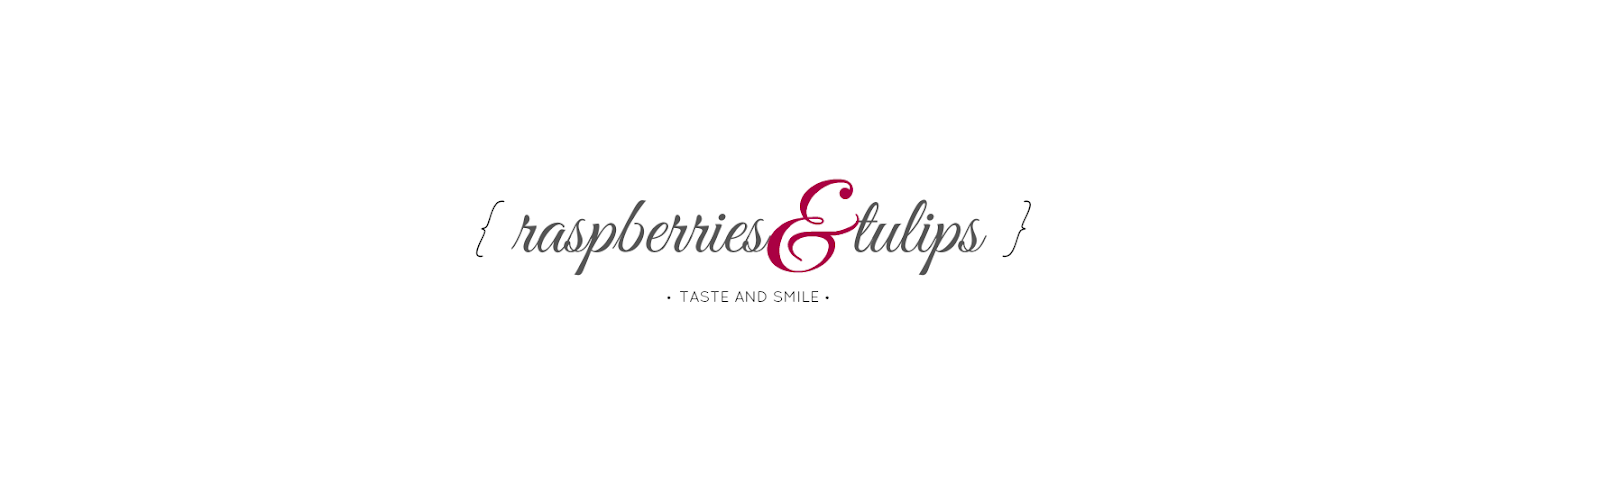 Raspberries & tulips